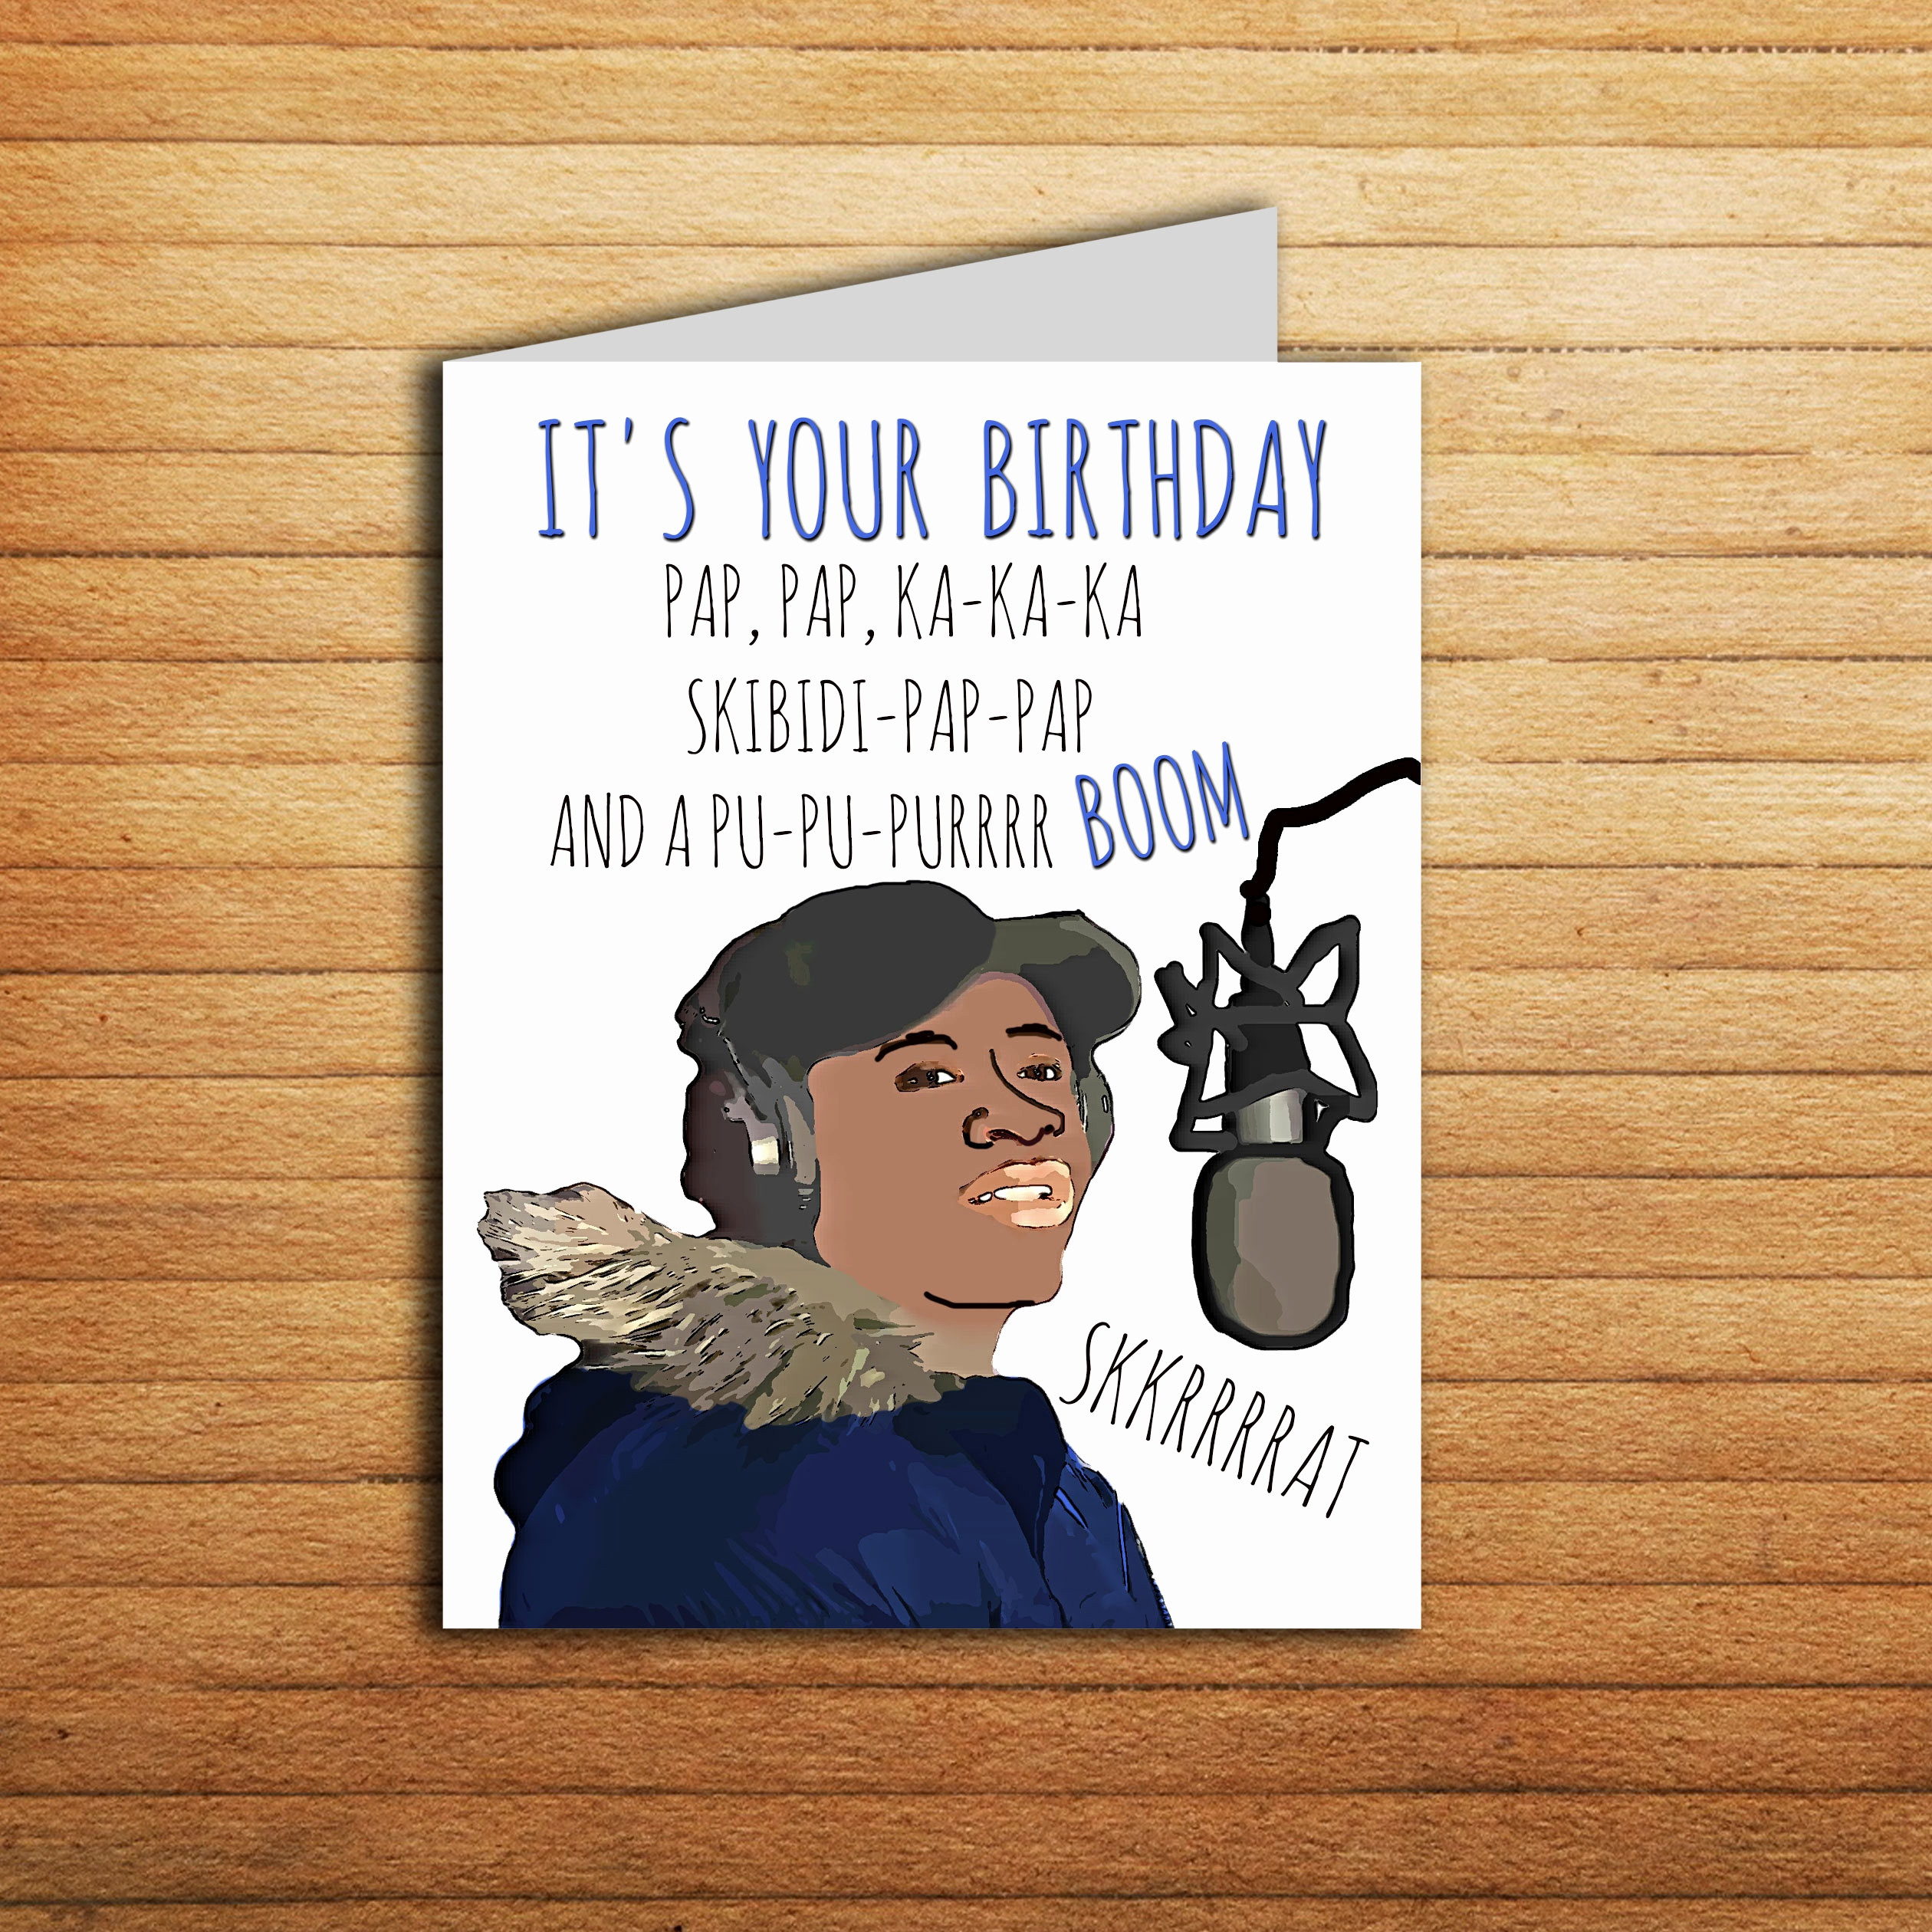 Birthday Candy Card Ideas Big Birthday Card Creative Ideas For Handmade Birthday Cards Dozor